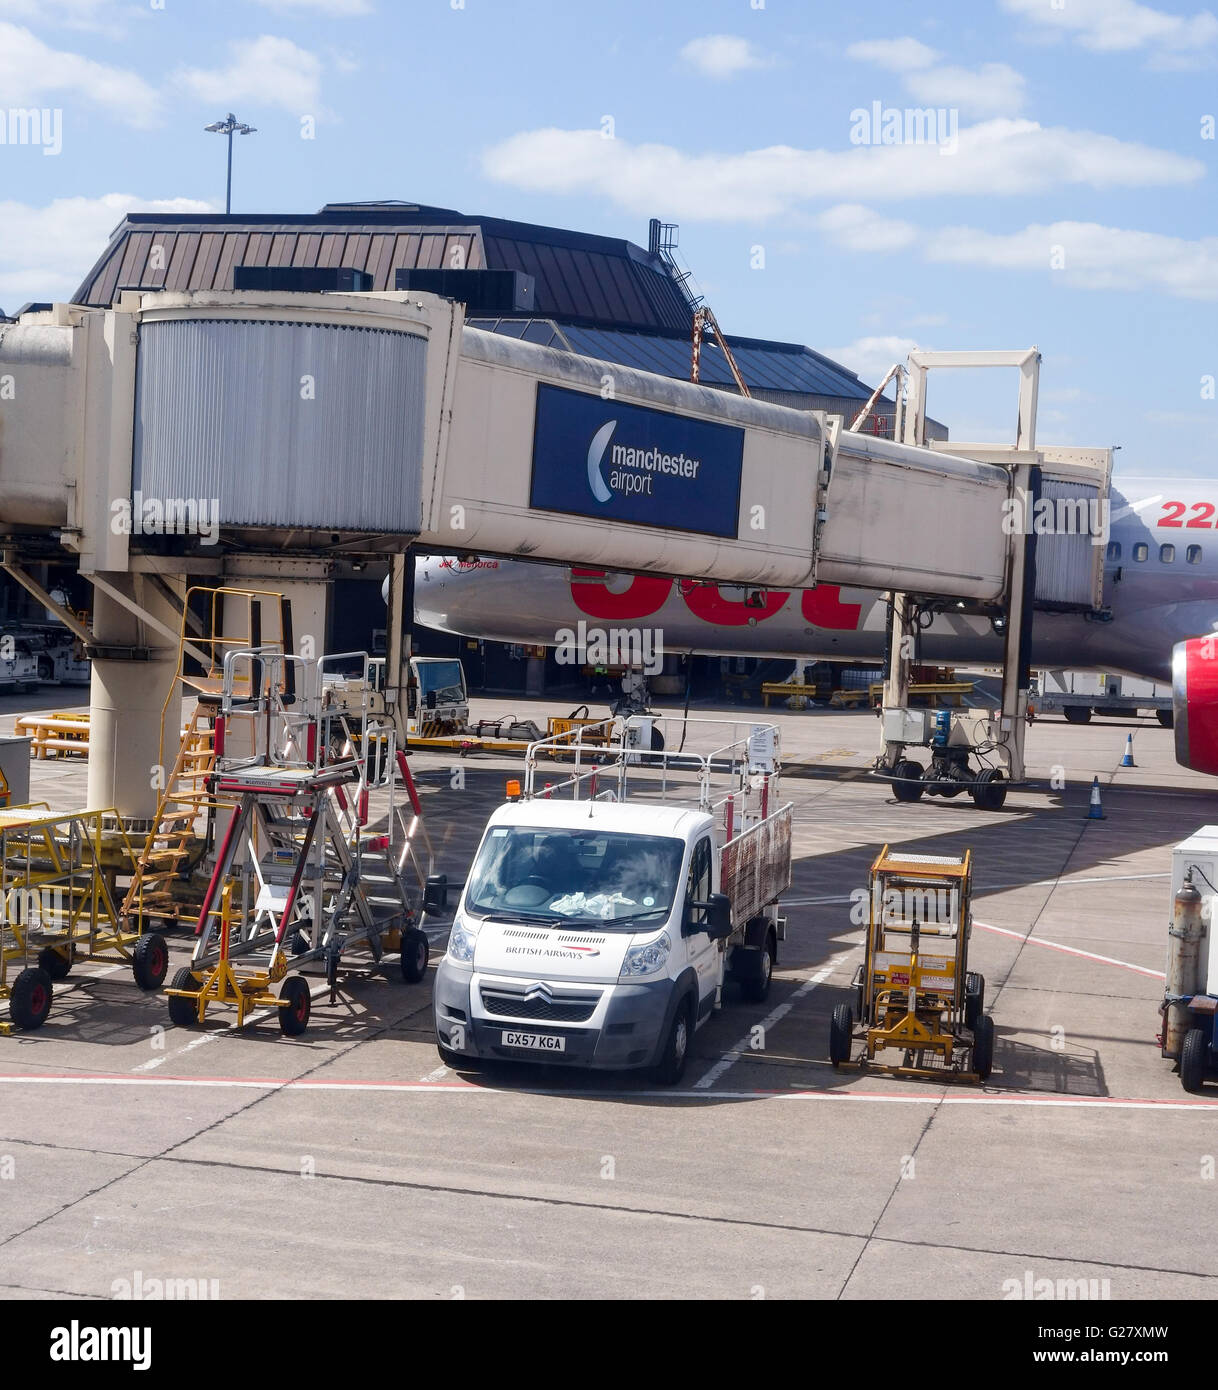 A jet bridge or passenger boarding bridge at Manchester Airport England UK Stock Photo